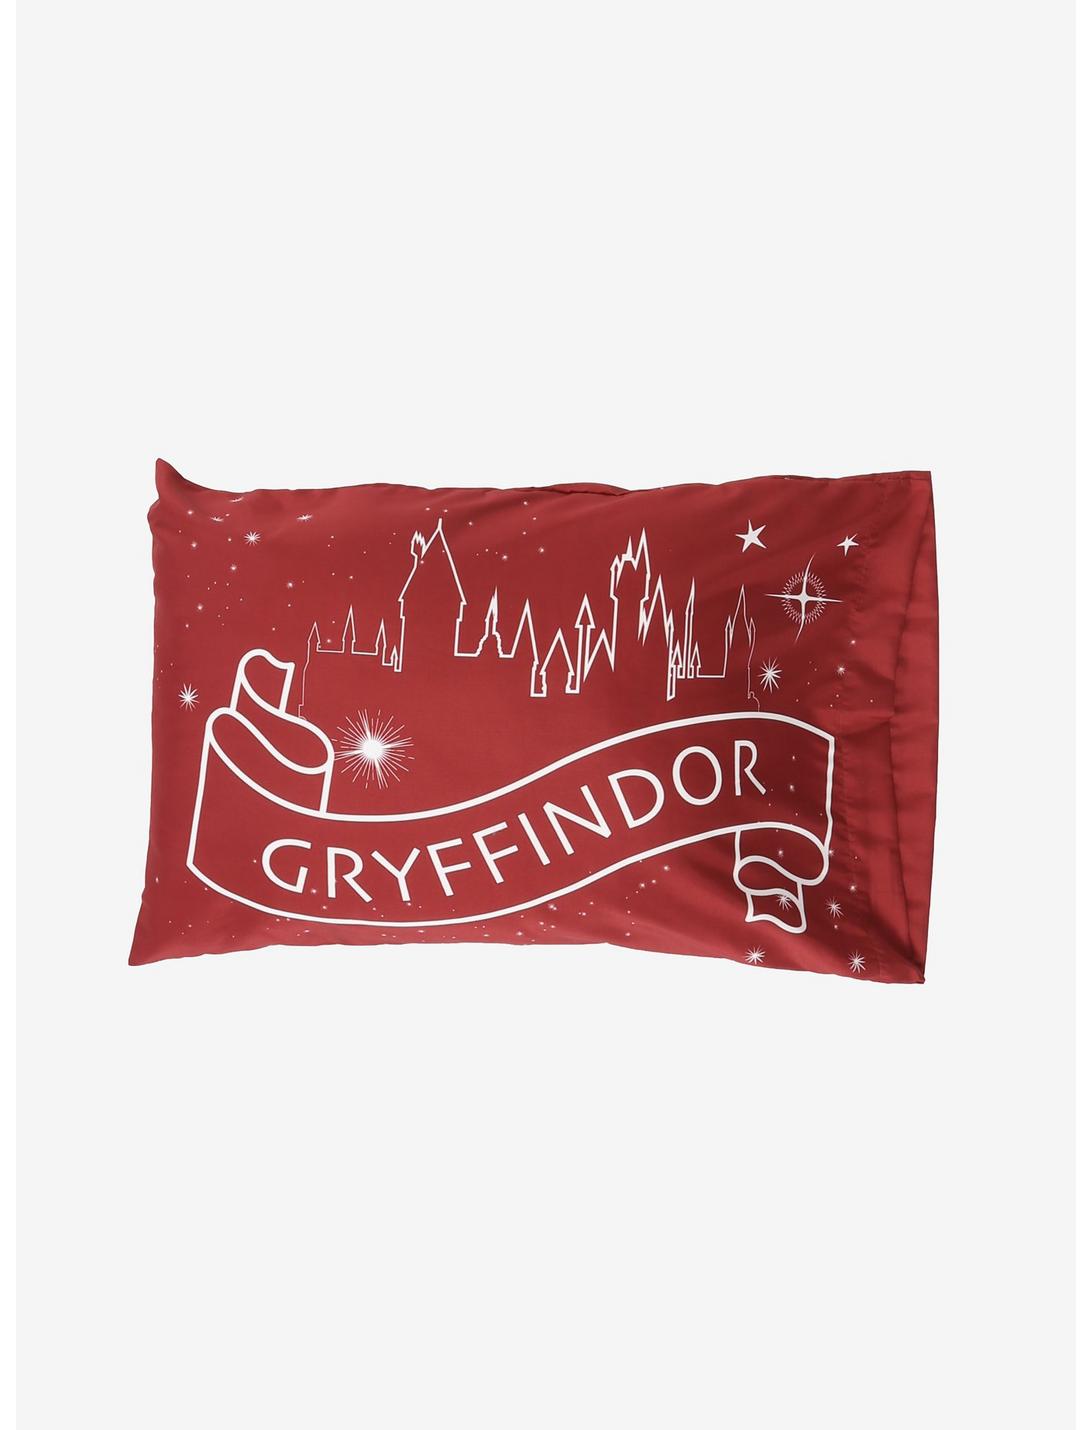 Harry Potter Gryffindor Celestial Pillowcase Set, , hi-res